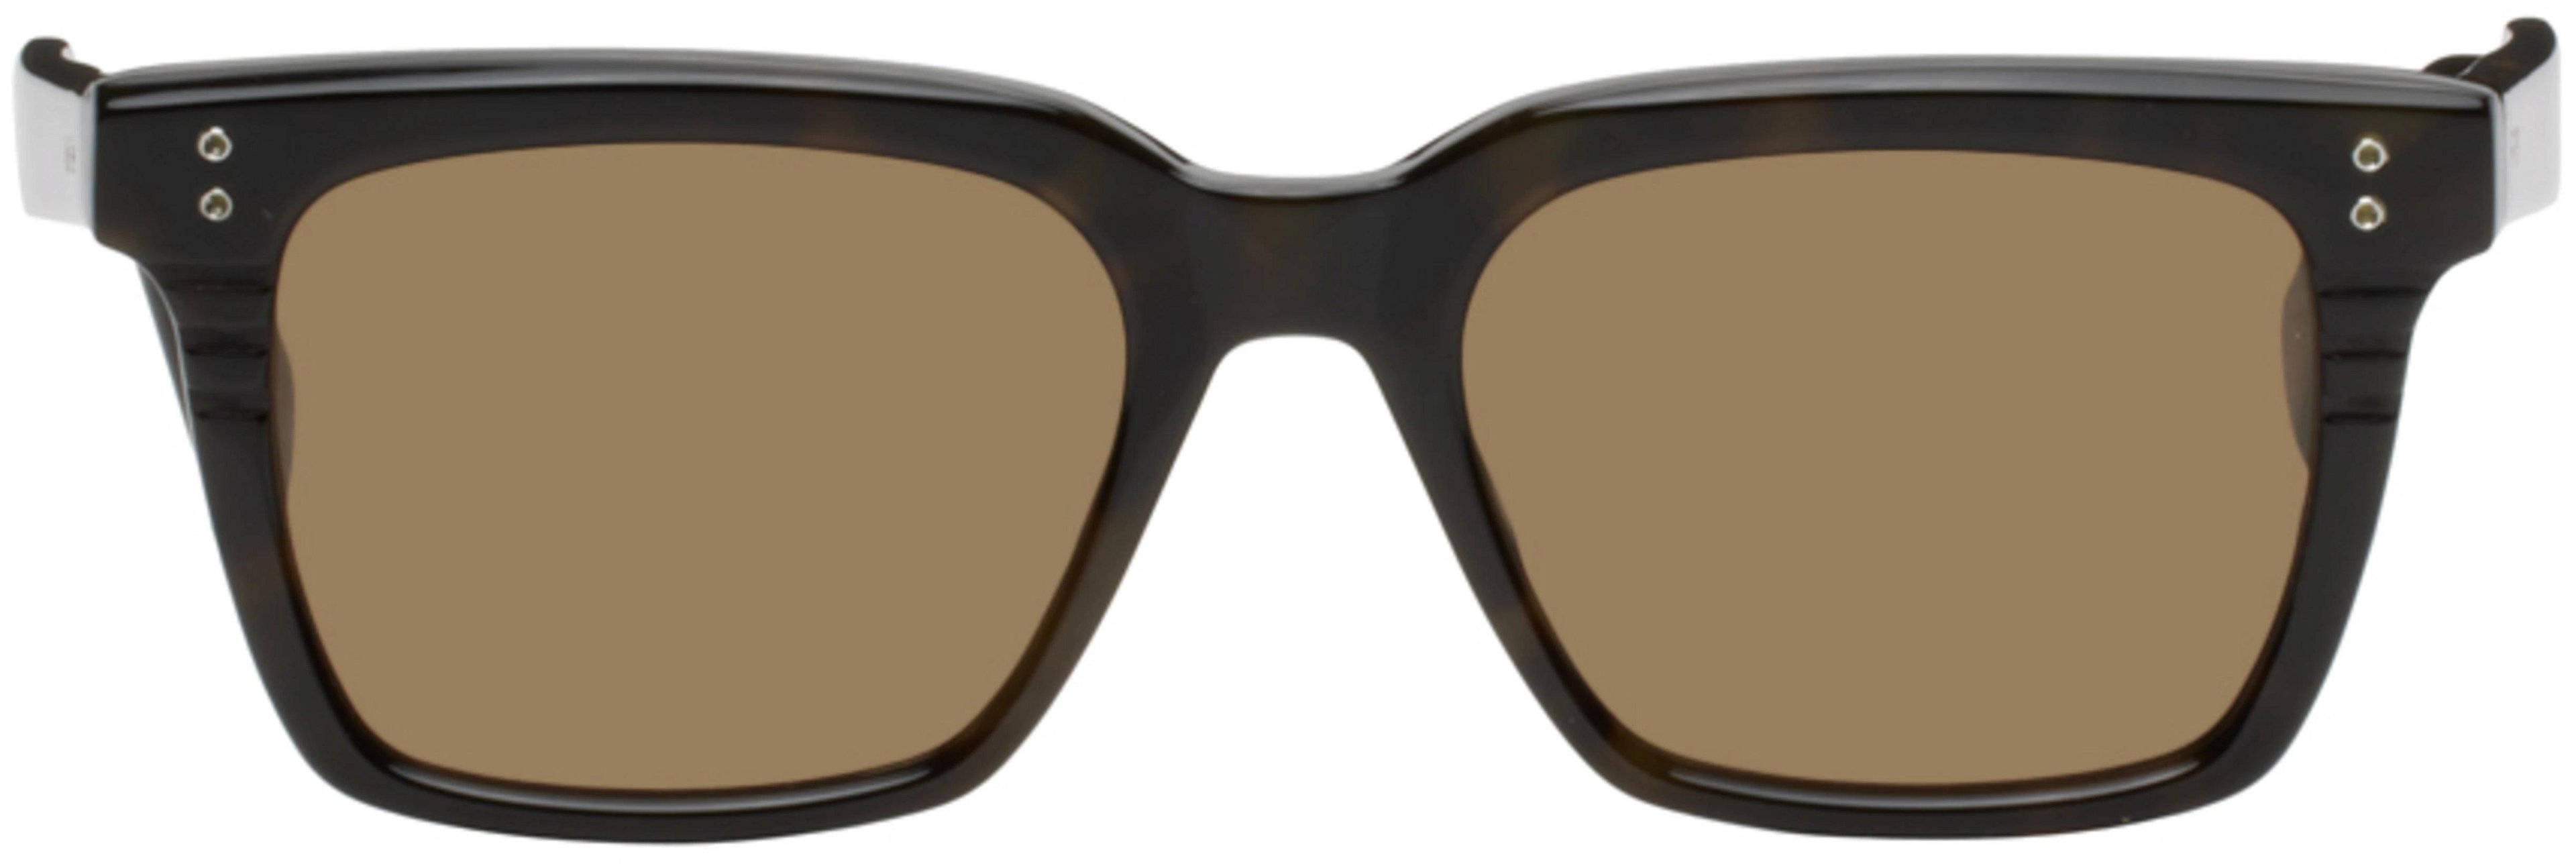 Tortoiseshell Sequoia Sunglasses by DITA